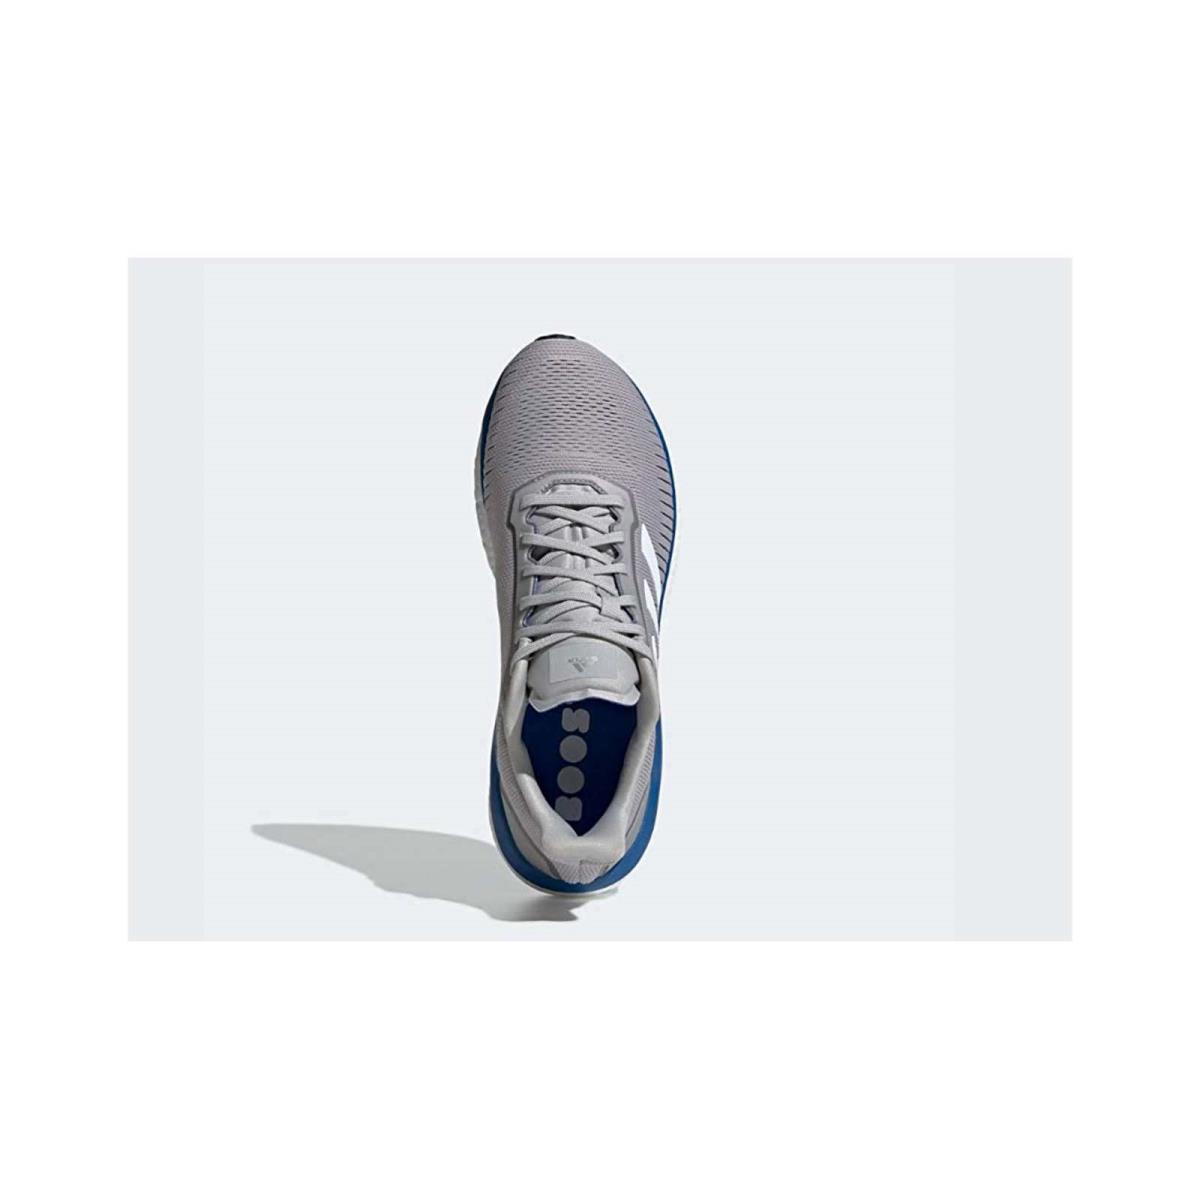 Adidas Men Solar Drive 19 Running Shoes Gray